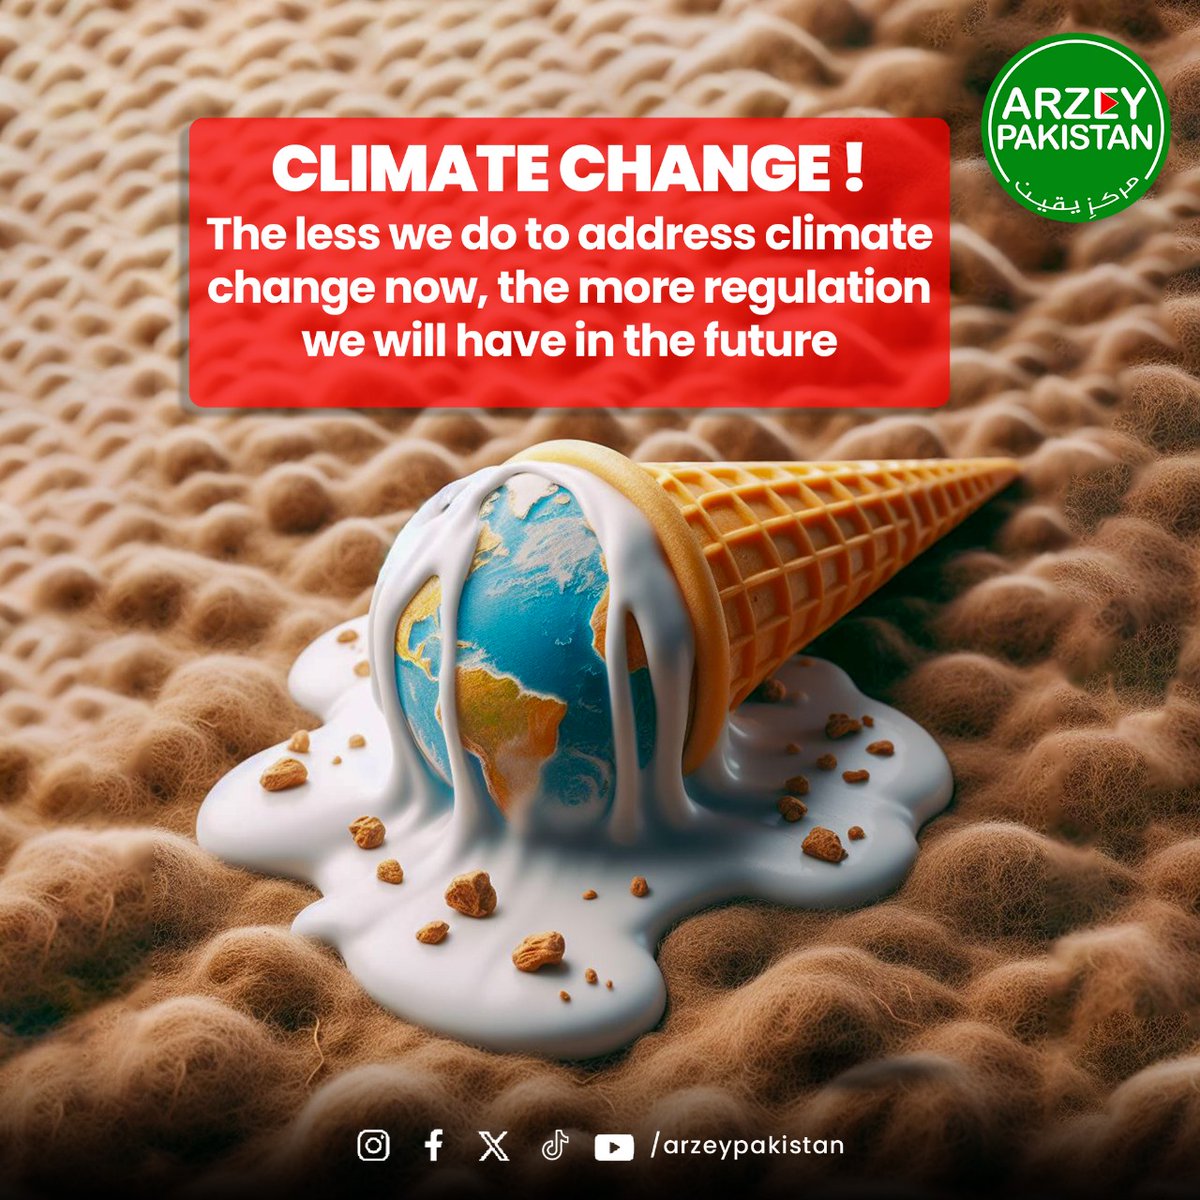 #ArzeyPakistan #ArzePakistan #ClimateAction #EnvironmentalJustice #GreenFuture #SustainabilityNow #RenewableEnergy #SaveOurPlanet #ClimateCrisis #CleanEnergy #EarthDayEveryDay #ActOnClimate #ClimateJustice #ProtectOurEarth